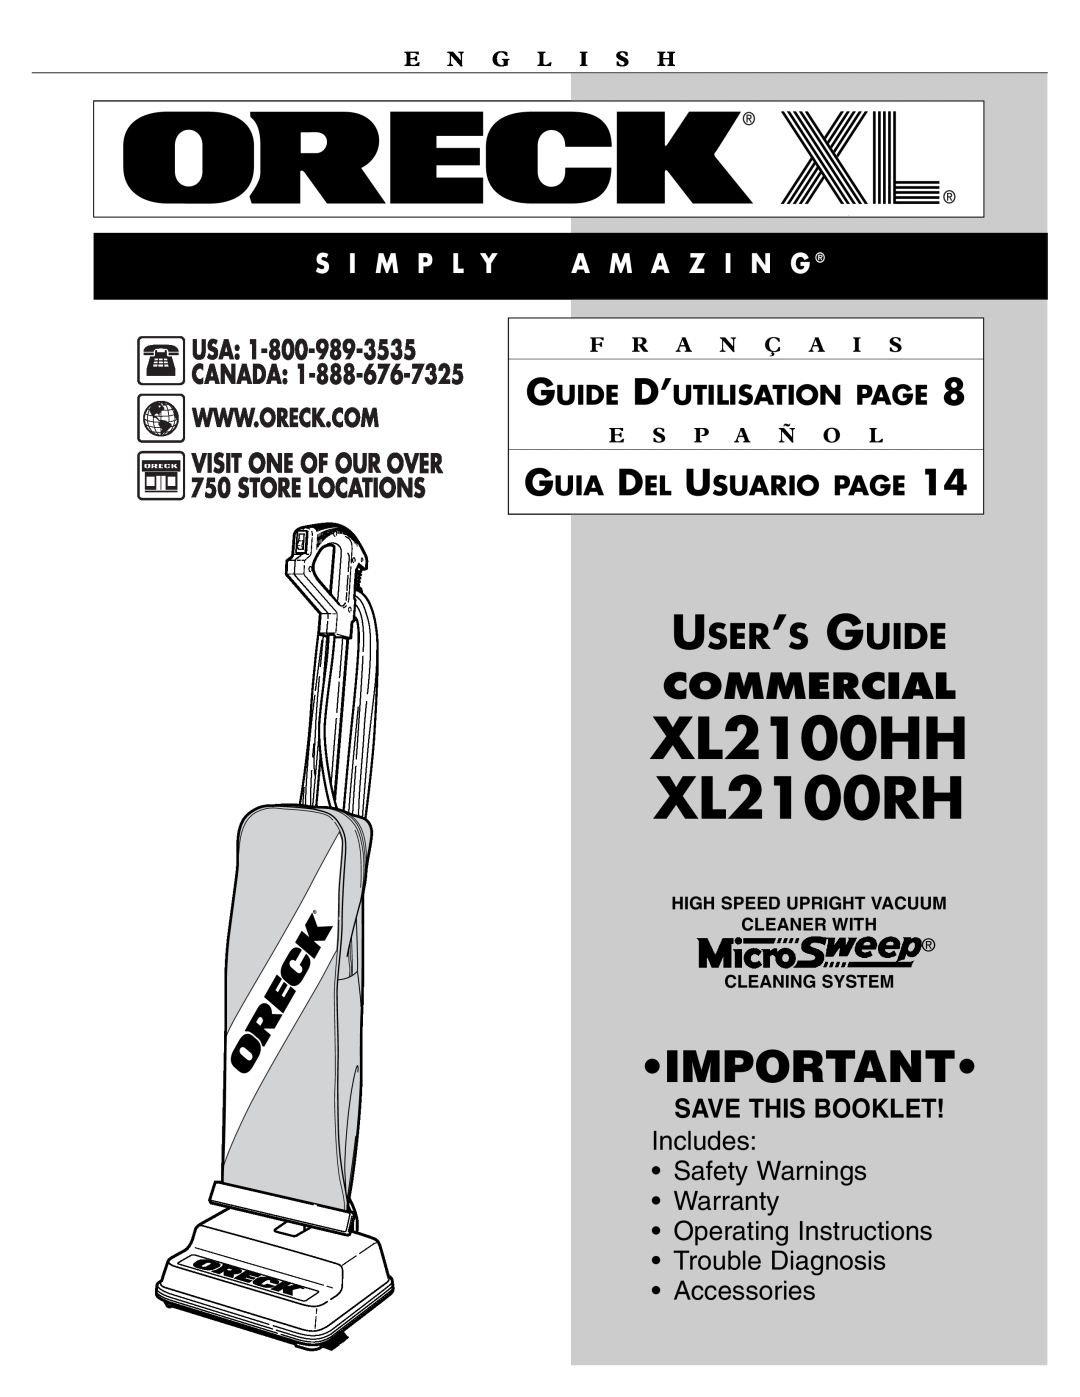 Oreck XL2100RH warranty Commercial, User’S Guide, S I M P L Y, A M A Z I N G, Guide D’Utilisation Page, E N G L I S H 